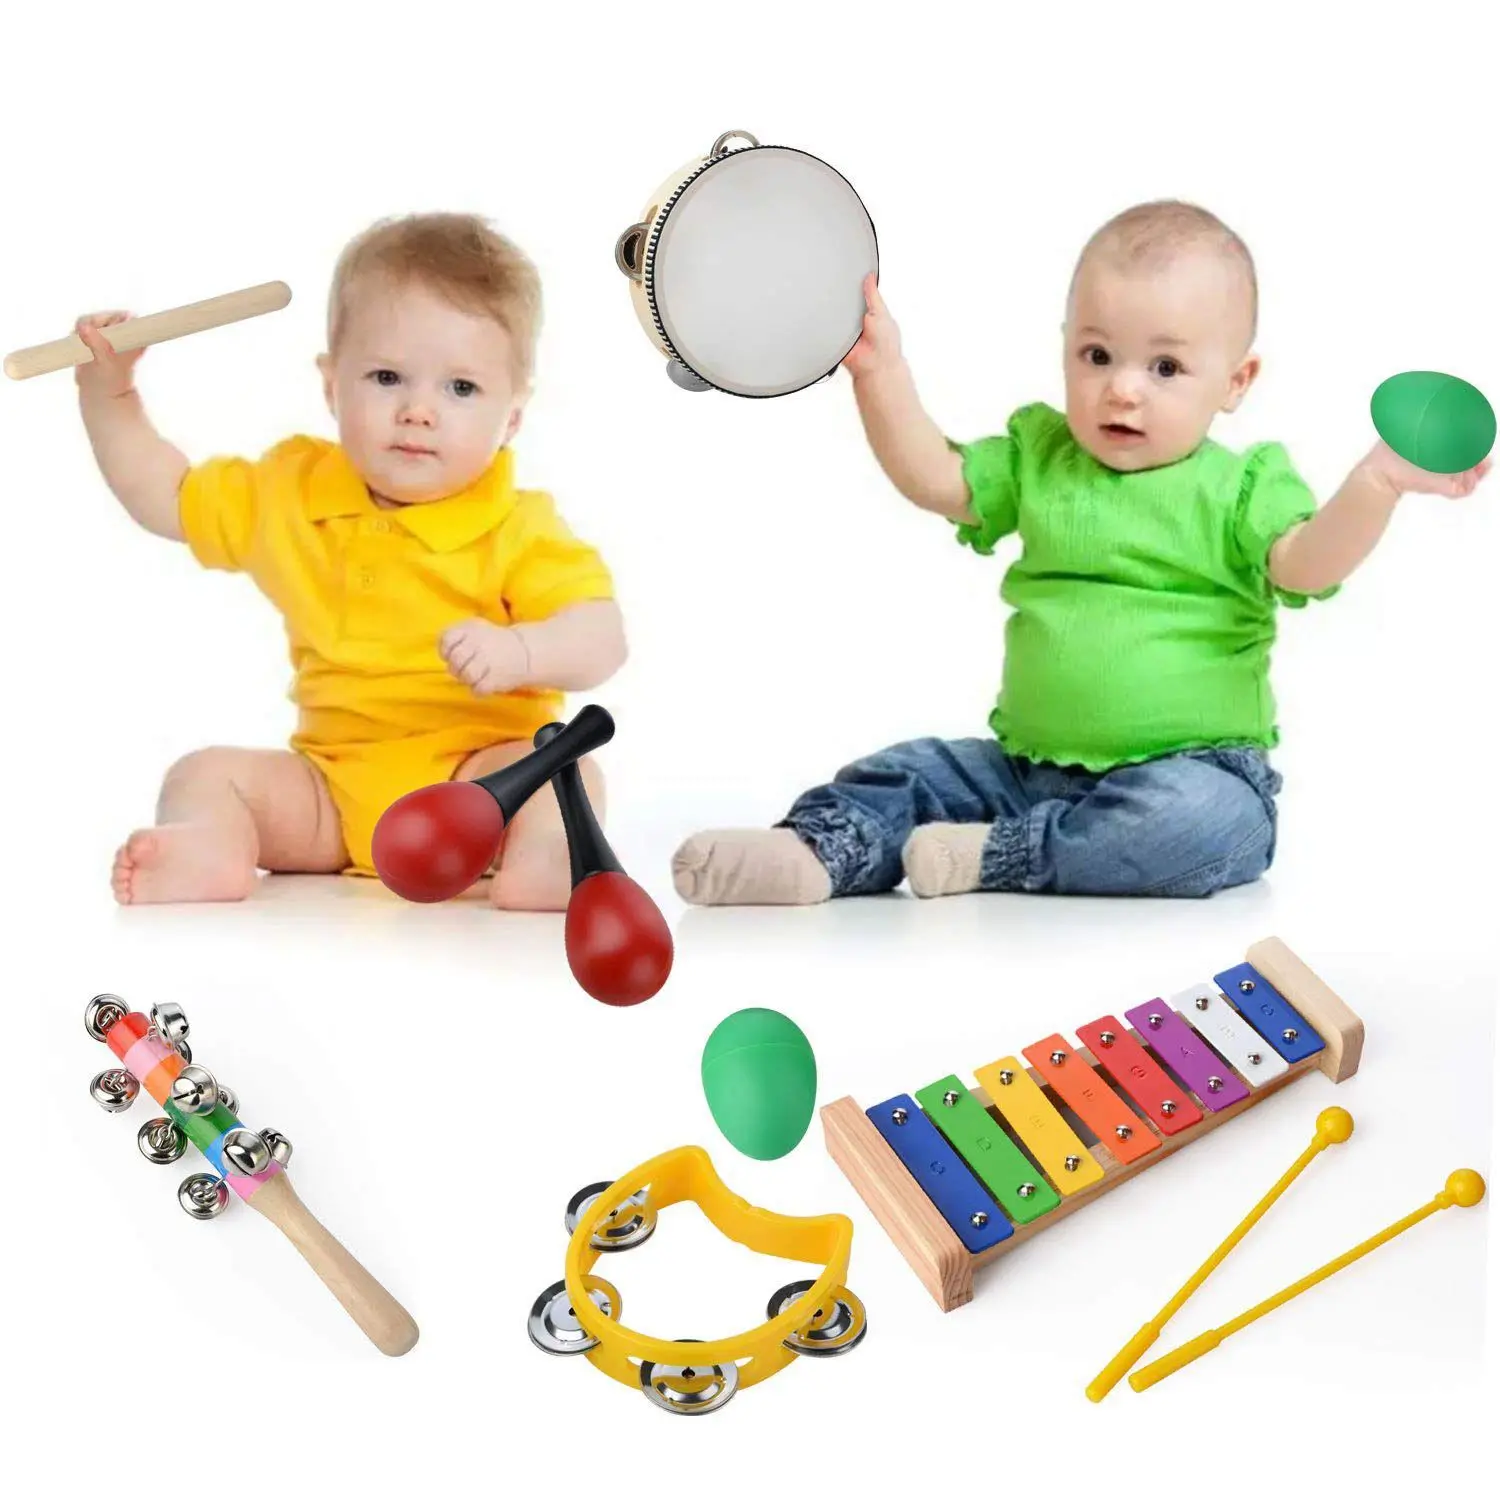 20 Pcs Baby Muziekinstrumenten Set Speelgoed Fun Peuters Houten Xylofoon Glockenspiel Speelgoed Rhythm Band Set, percussie Voor Kids _ - AliExpress Mobile